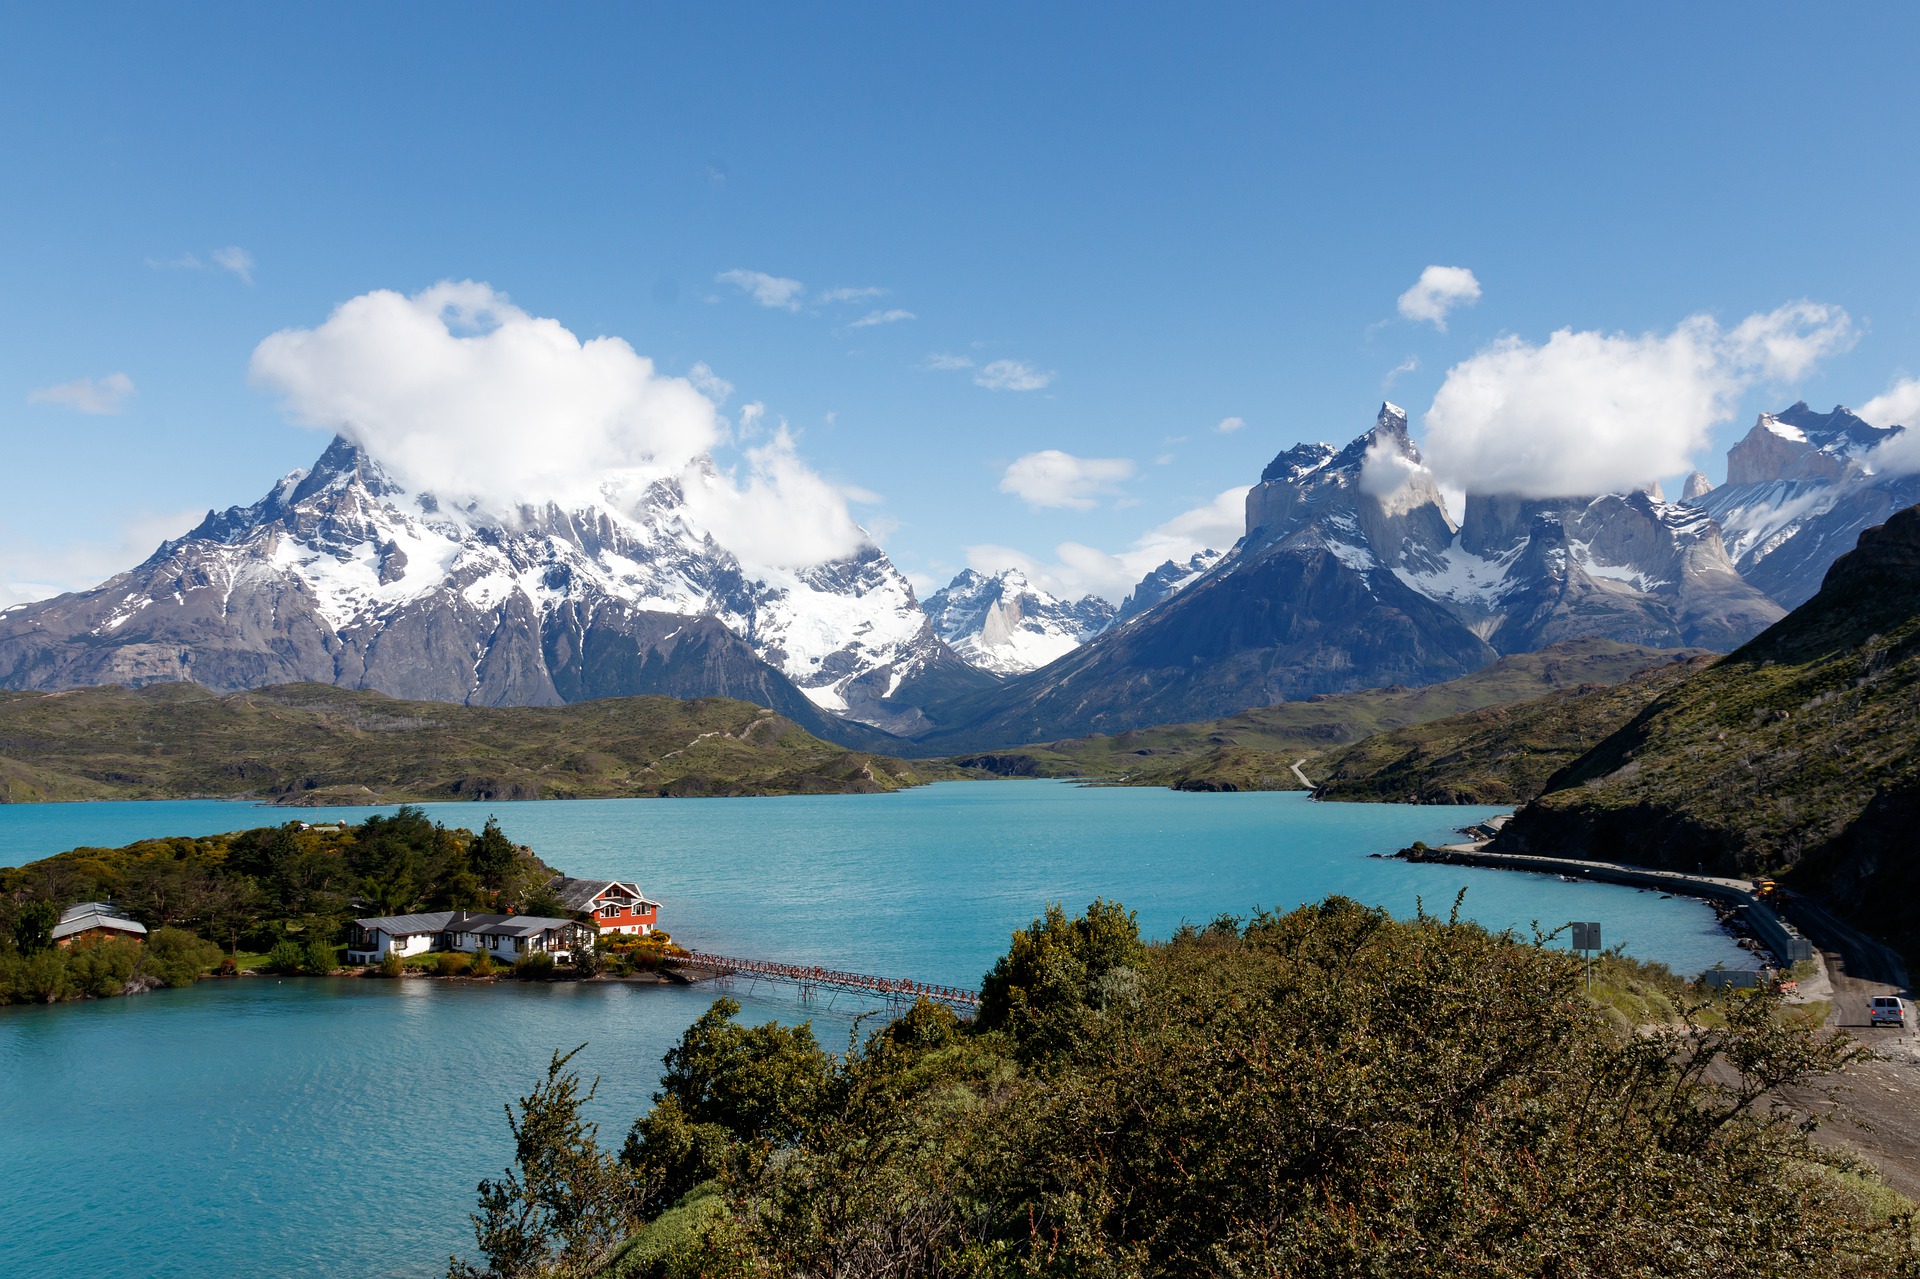 Destination image of Chile